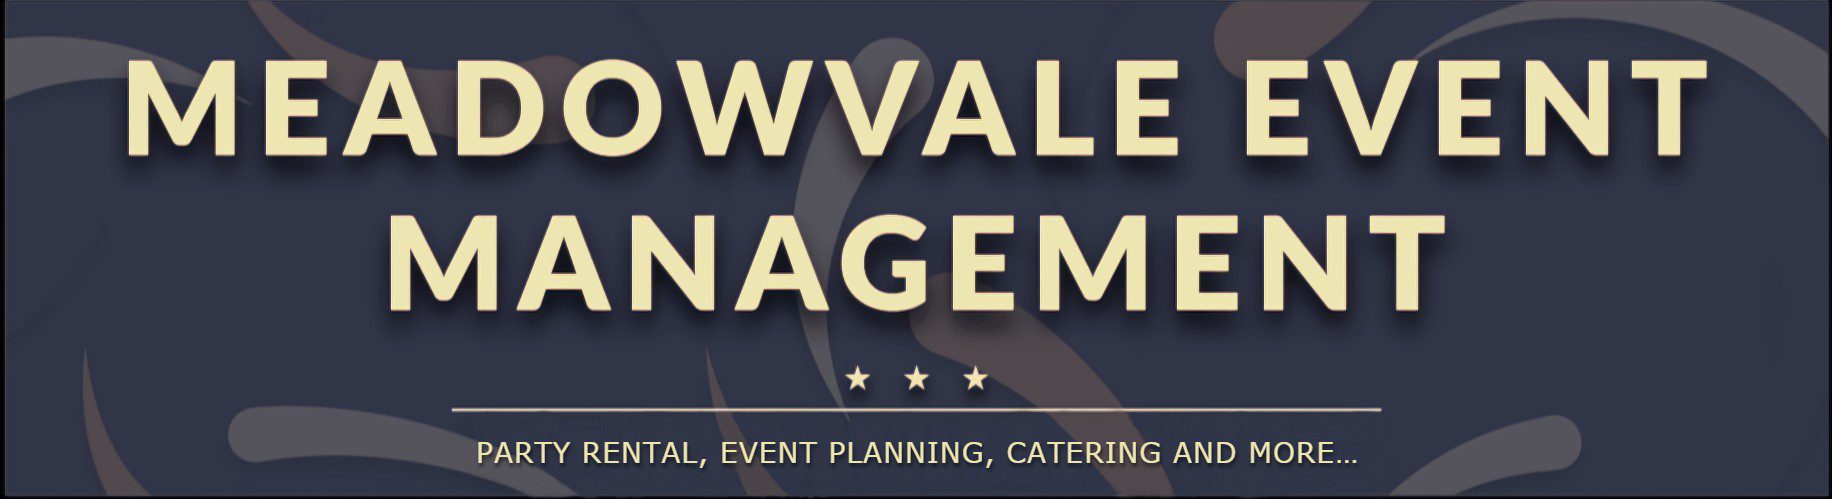 Meadowvale Event Management MPR